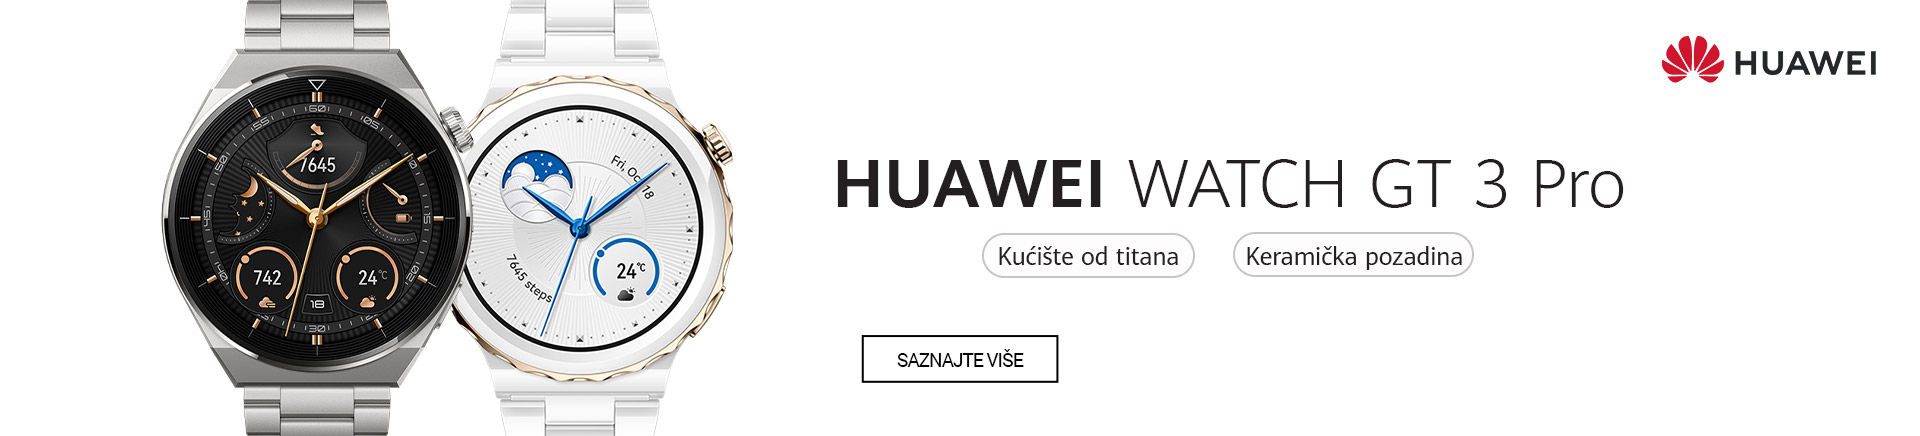 Huawei watch GT3 PRO